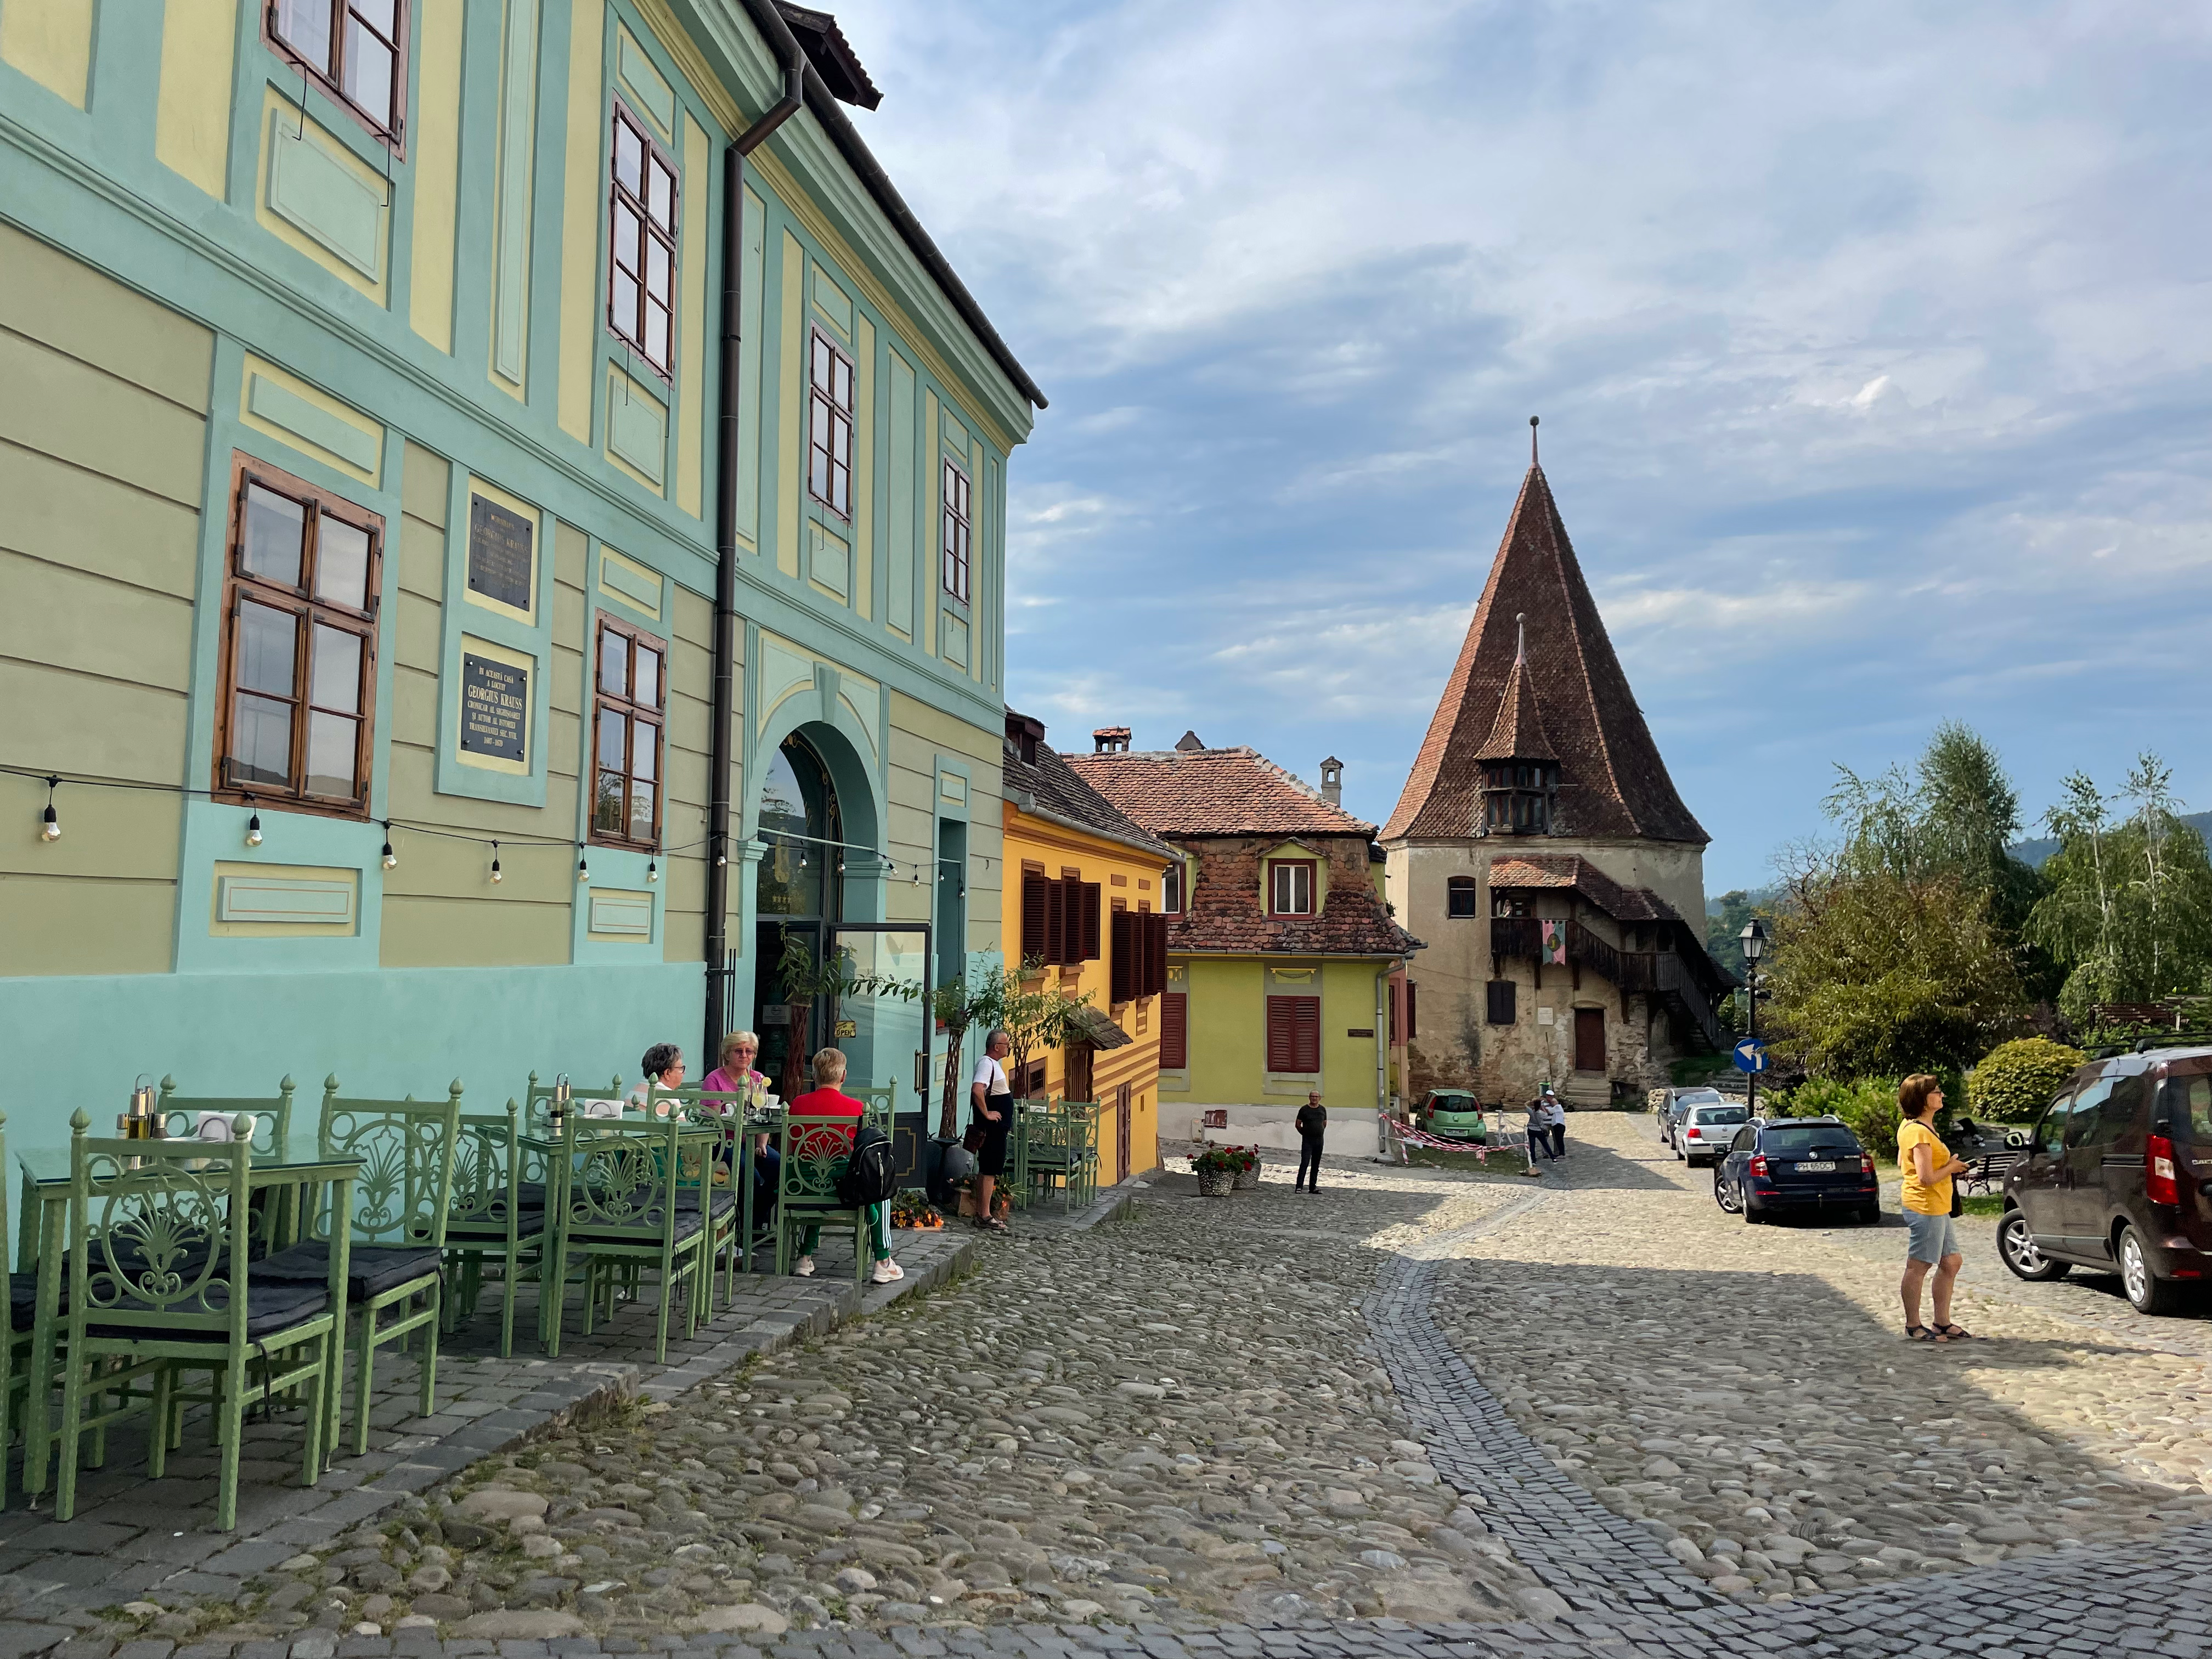 Sighișoara: A Charming Transylvanian Town with a Rich History